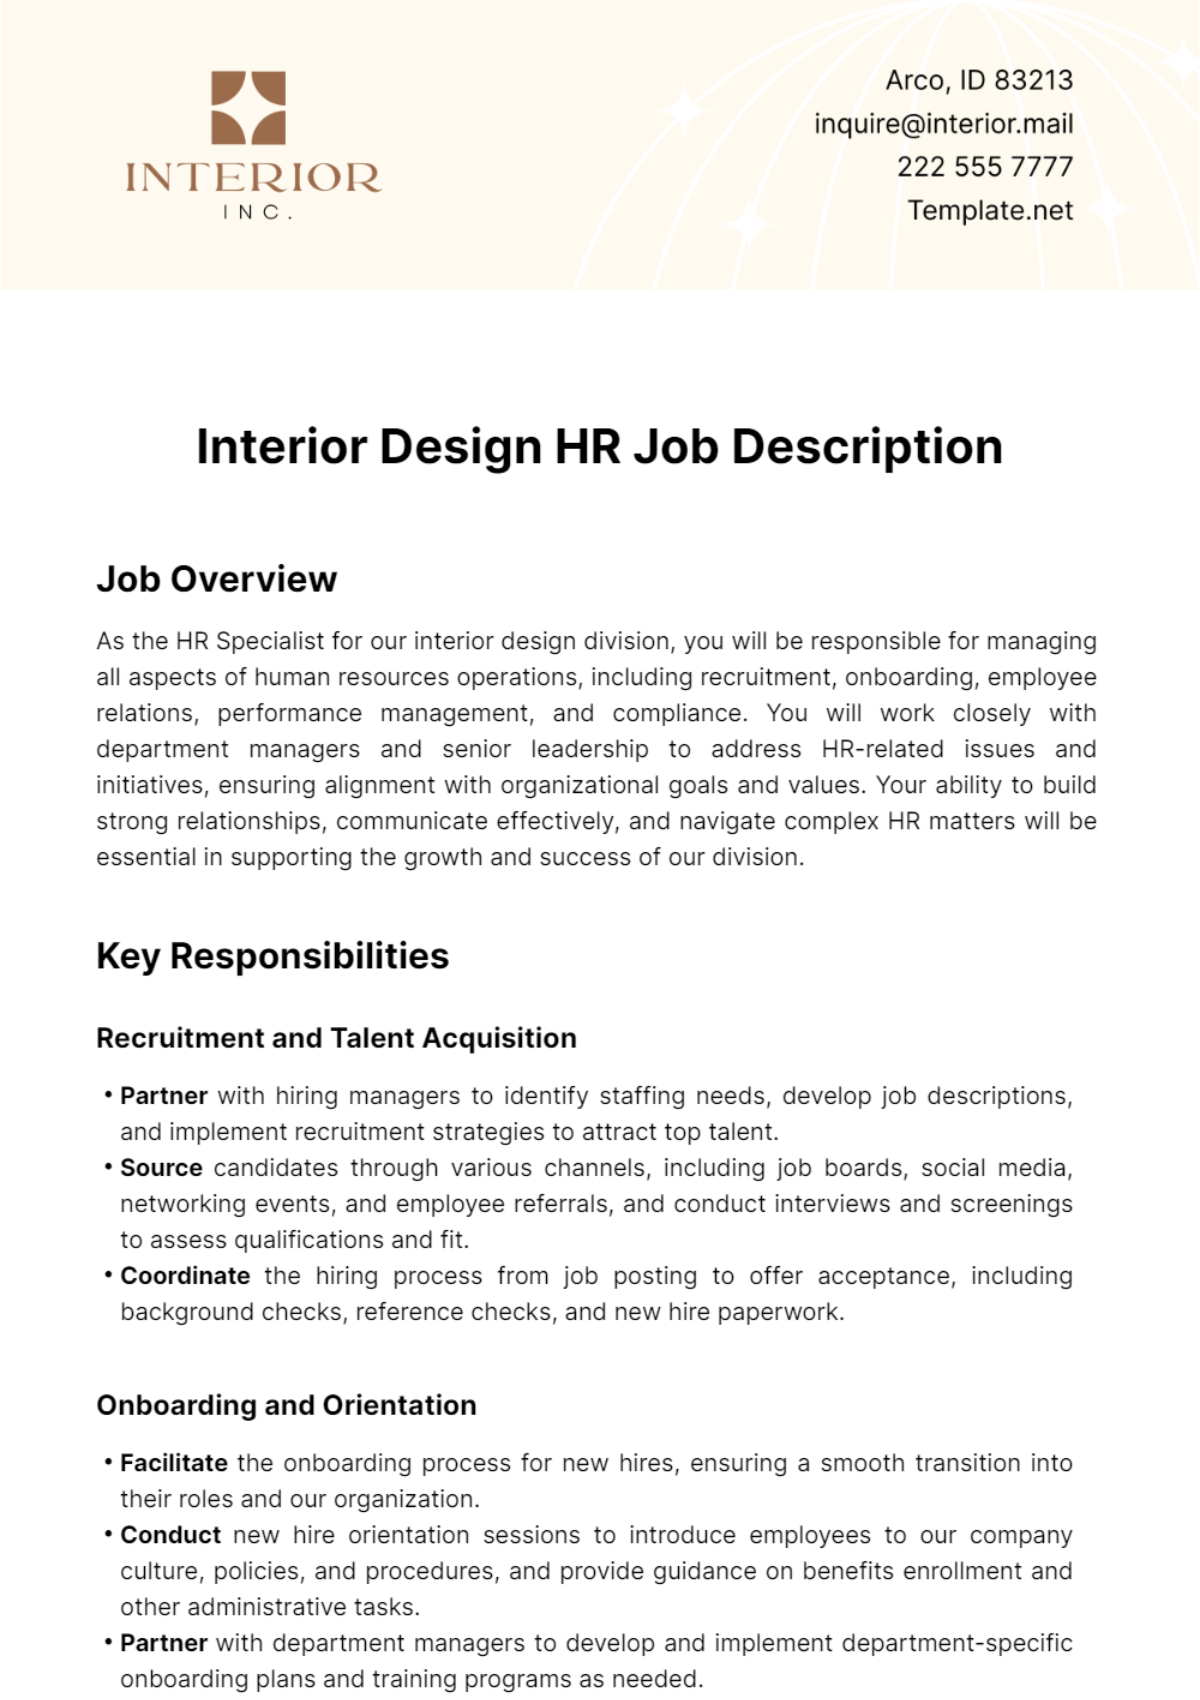 Interior Design HR Job Description Template